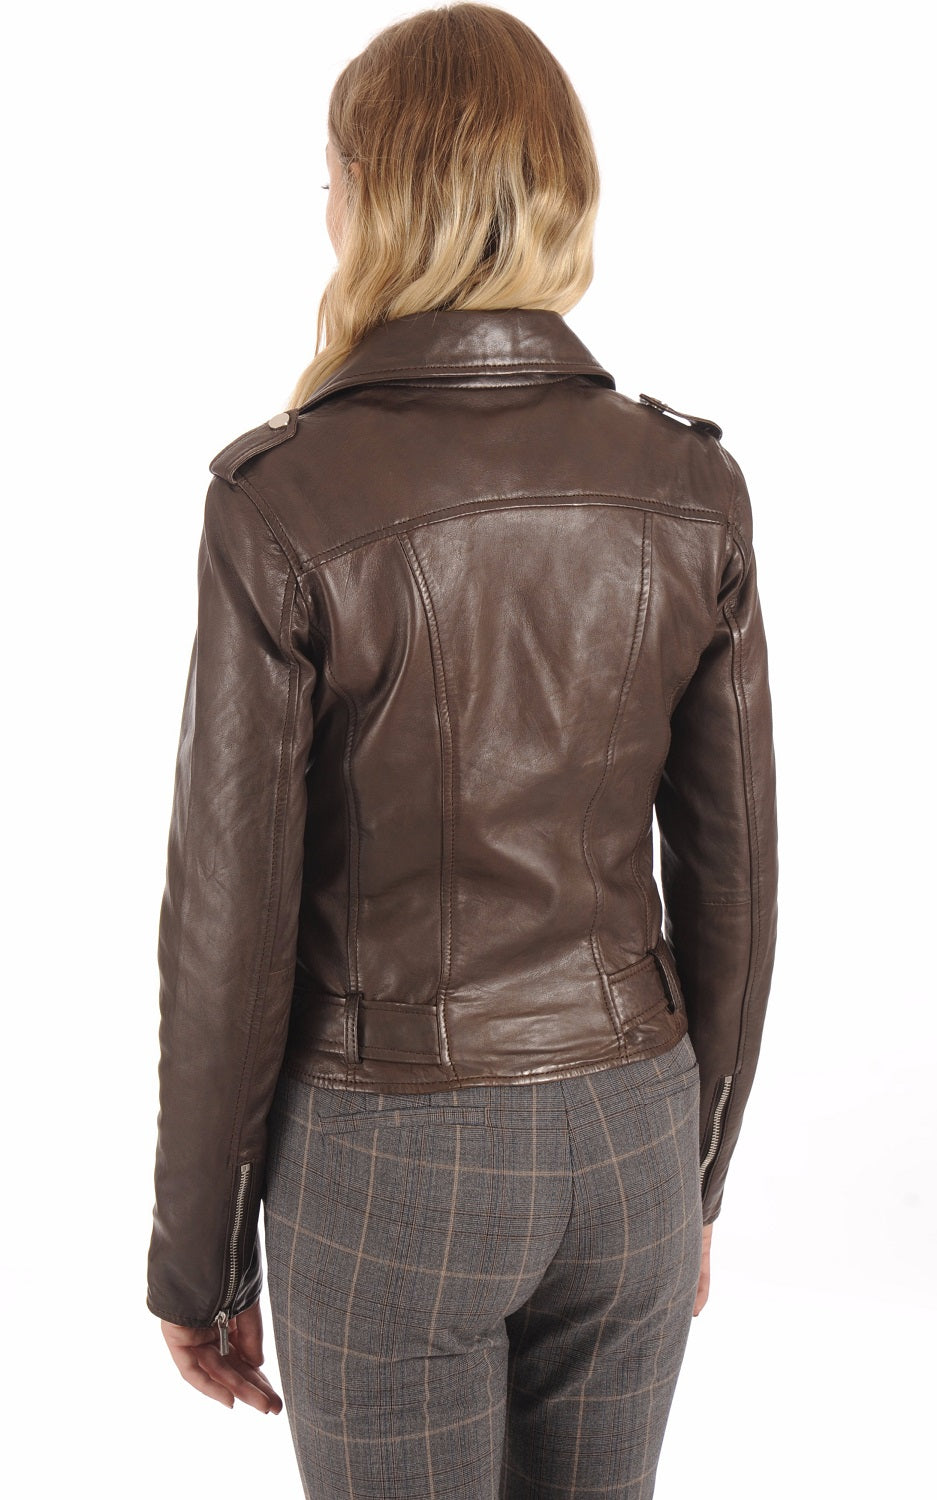 Women Genuine Leather Jacket WJ 88 freeshipping - SkinOutfit